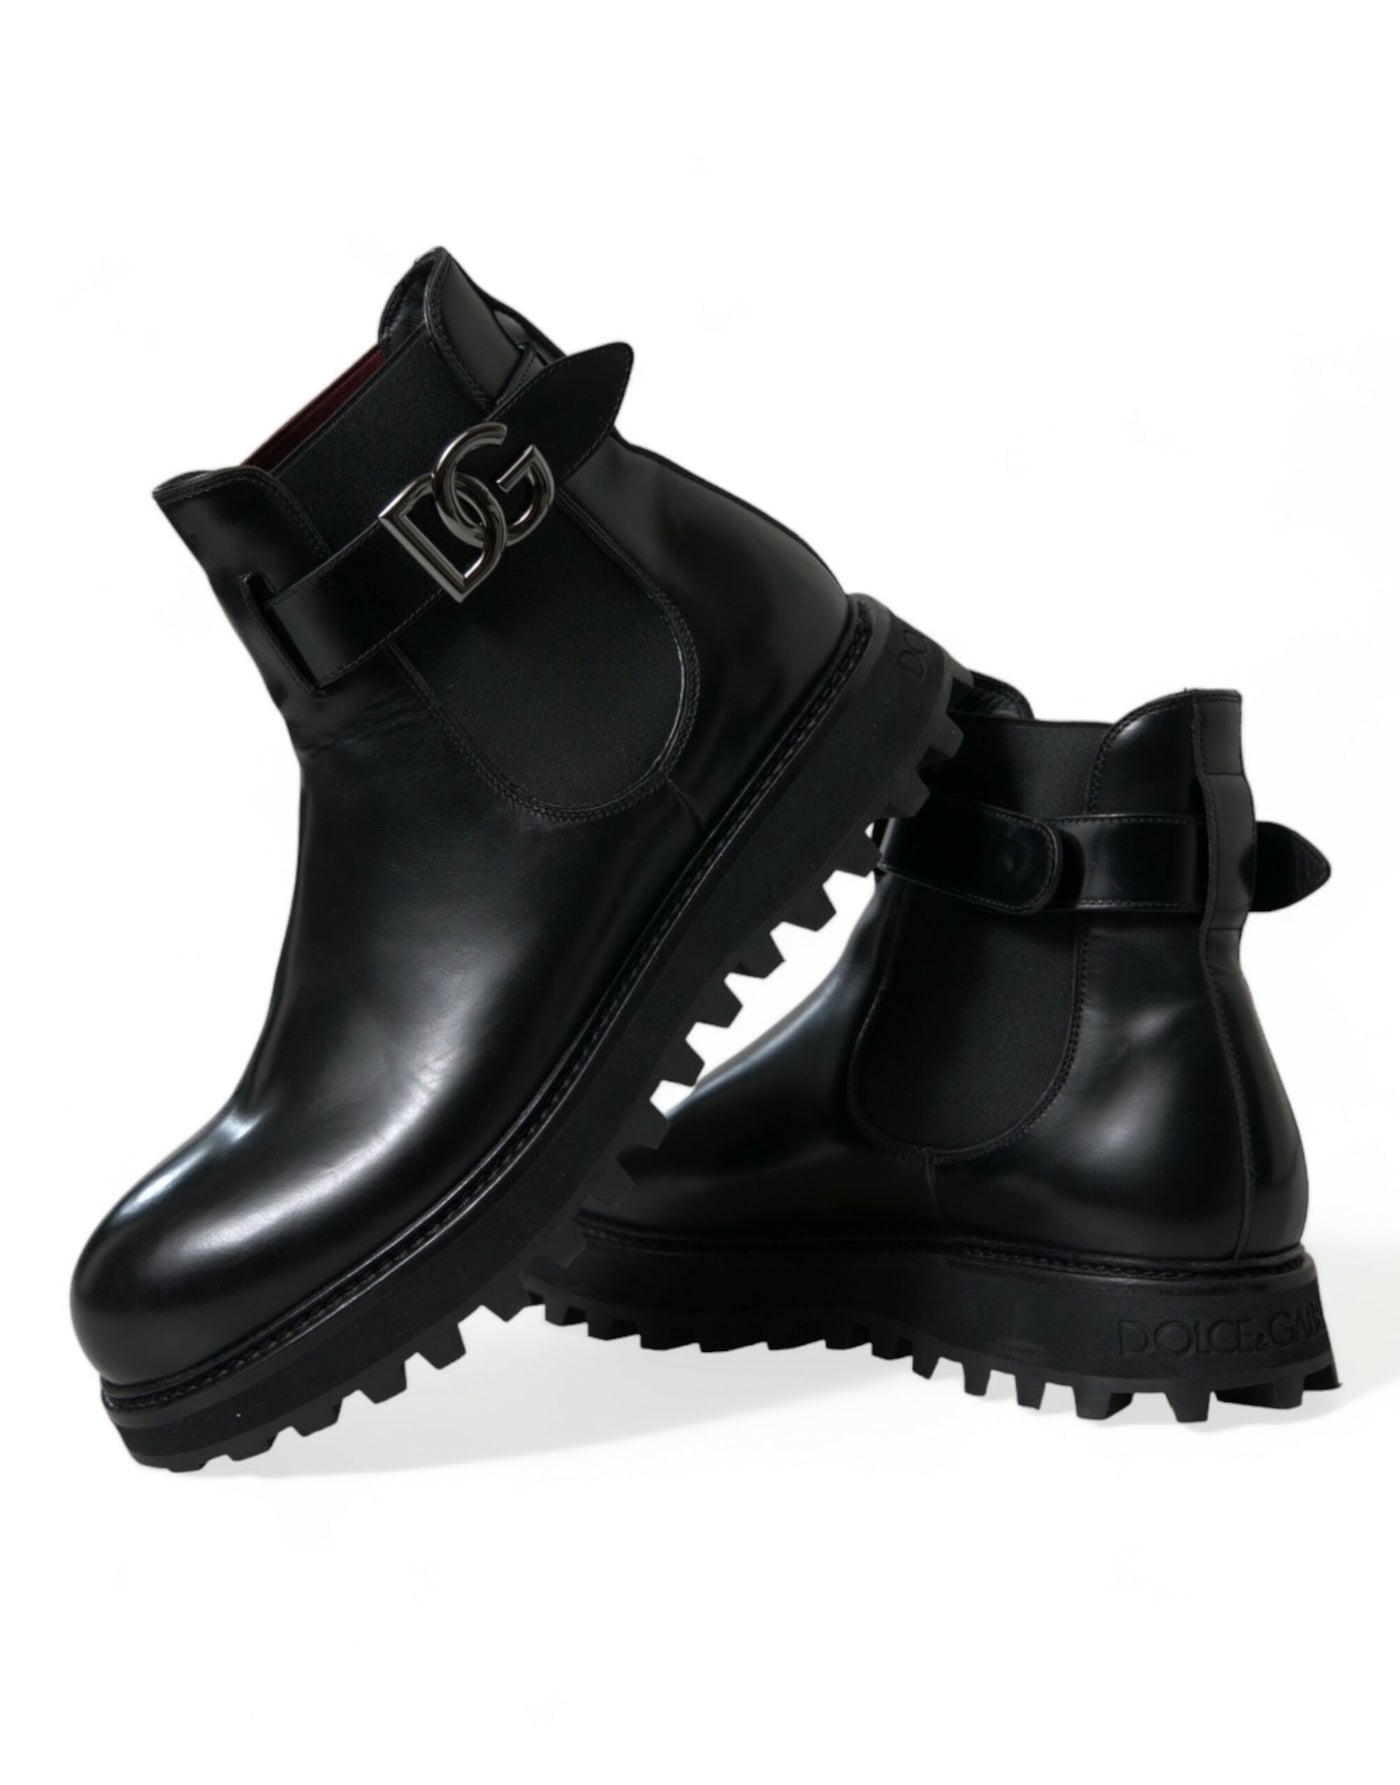 Dolce & Gabbana Black Chelsea Belted DG Logo Boots Shoes